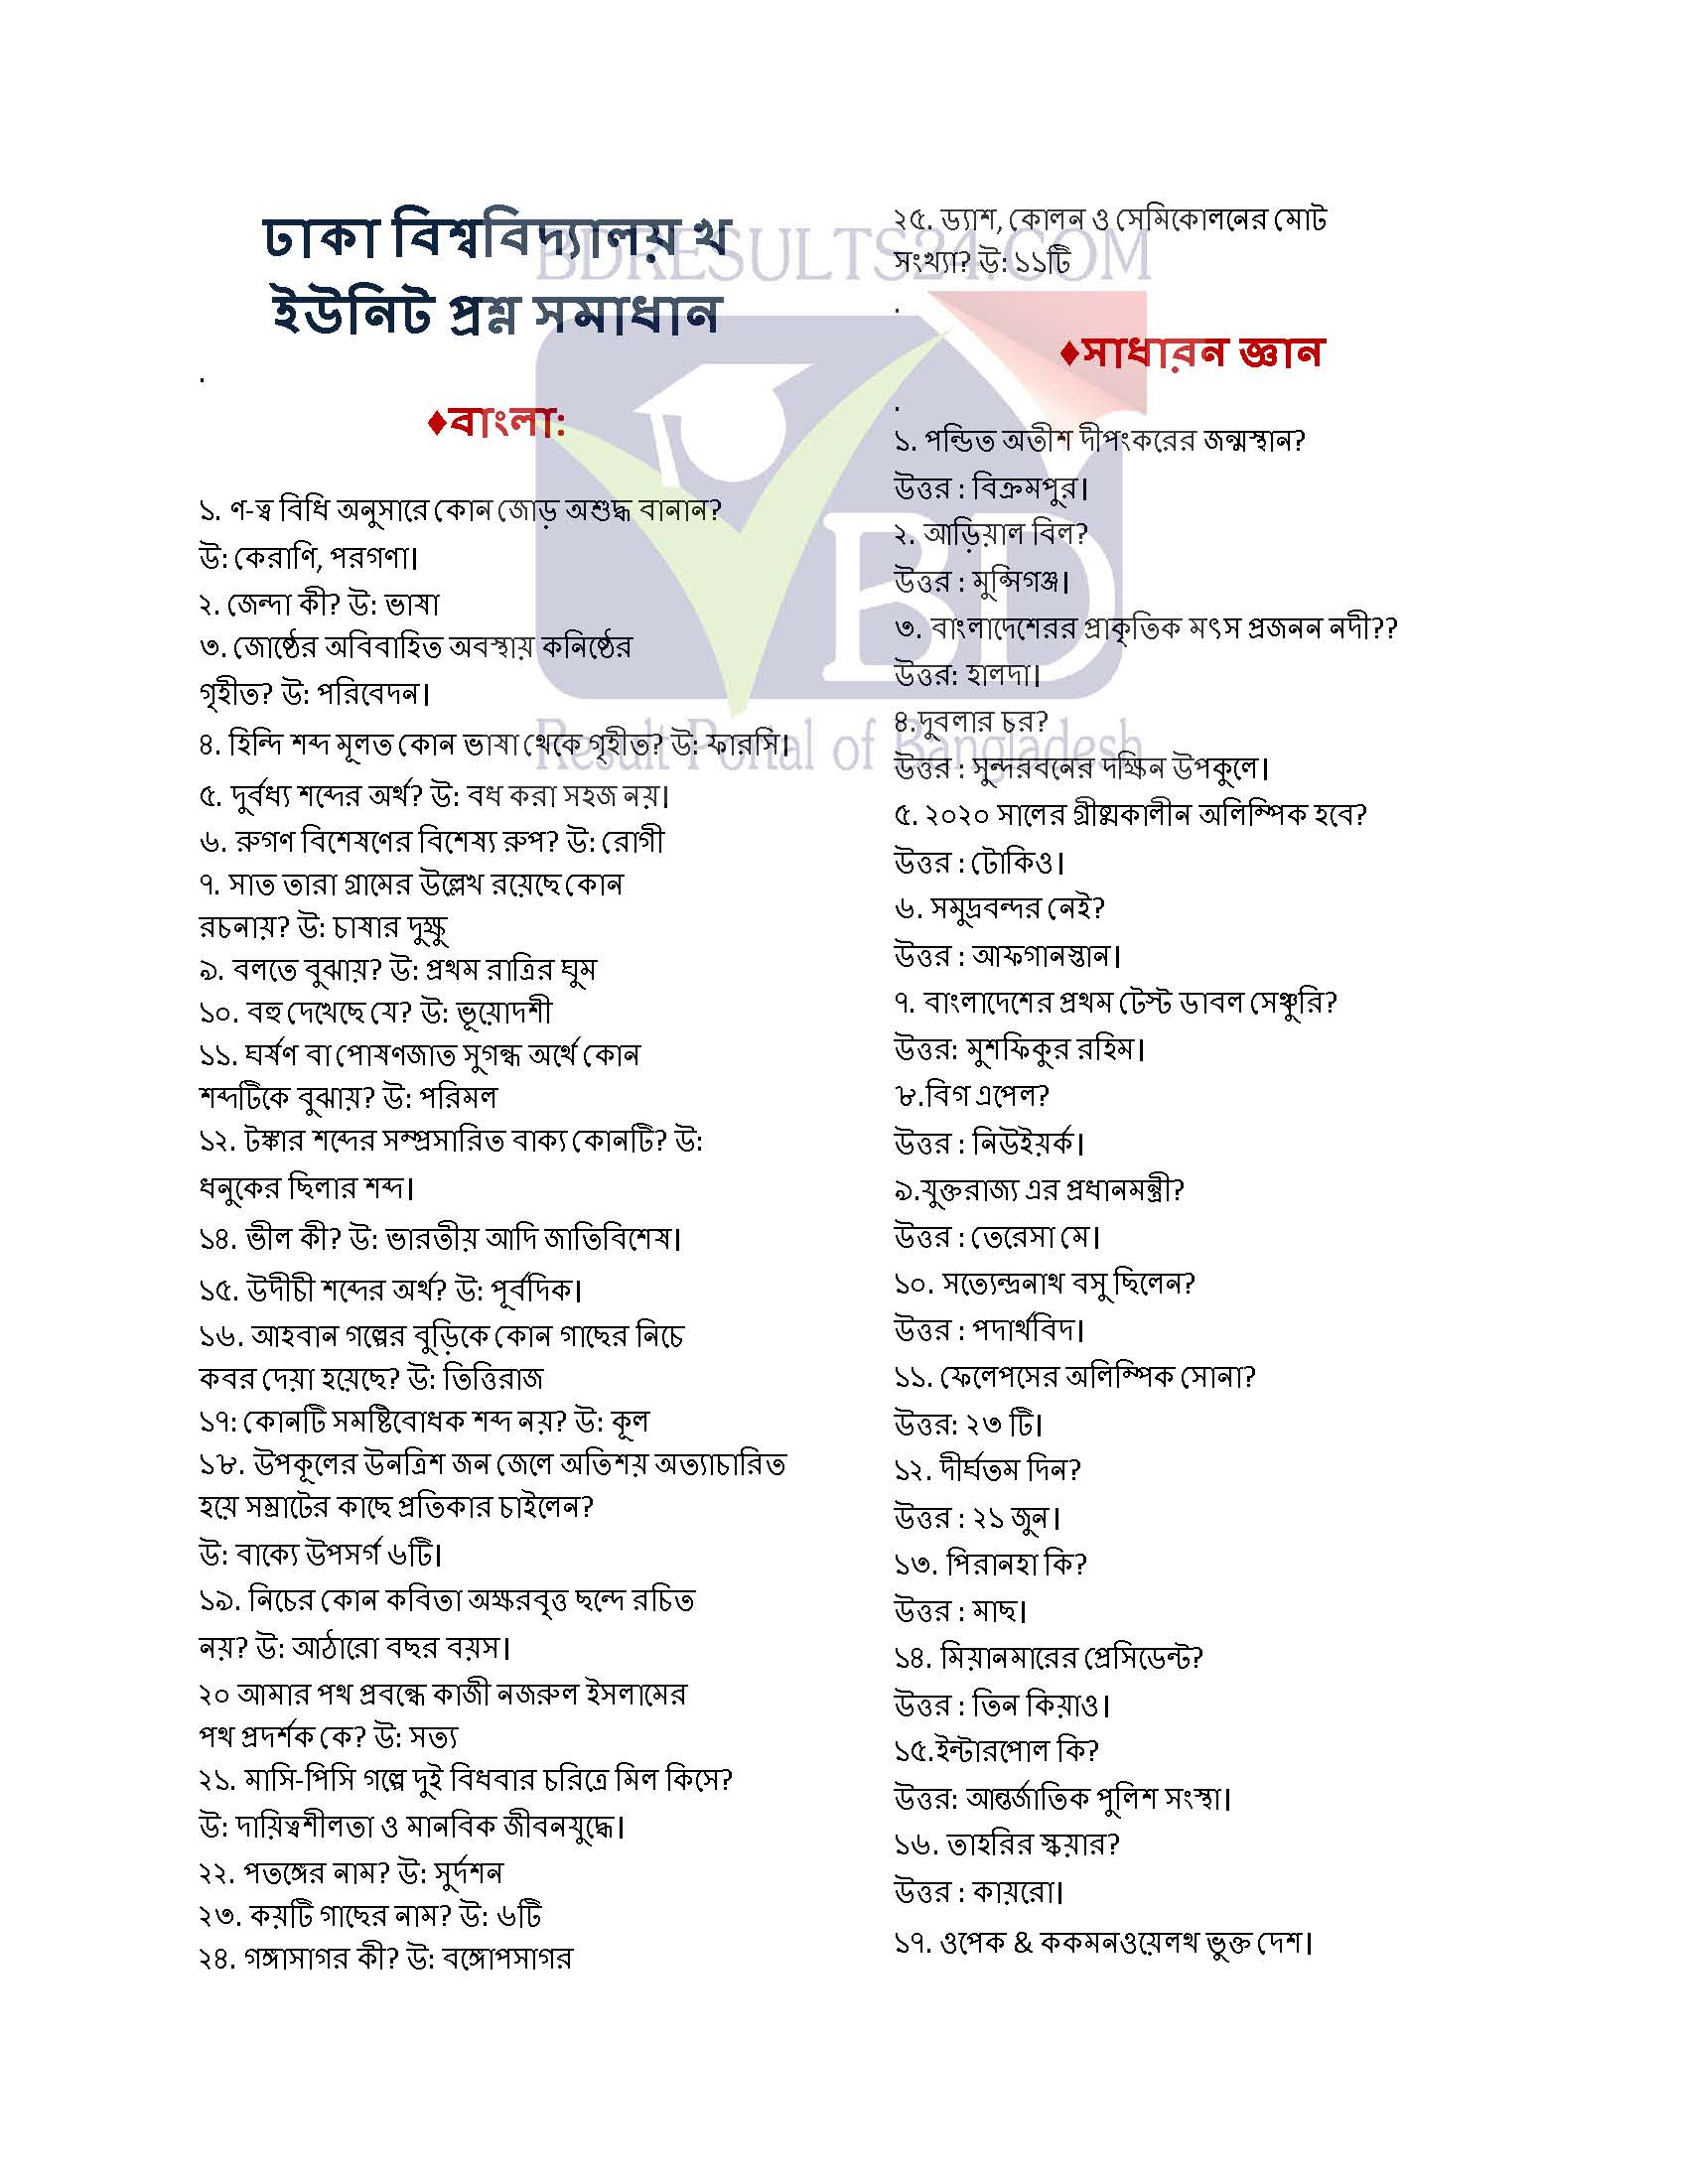 Dhaka University KHA Unit Question Solution 2017 18 BD RESULTS 24